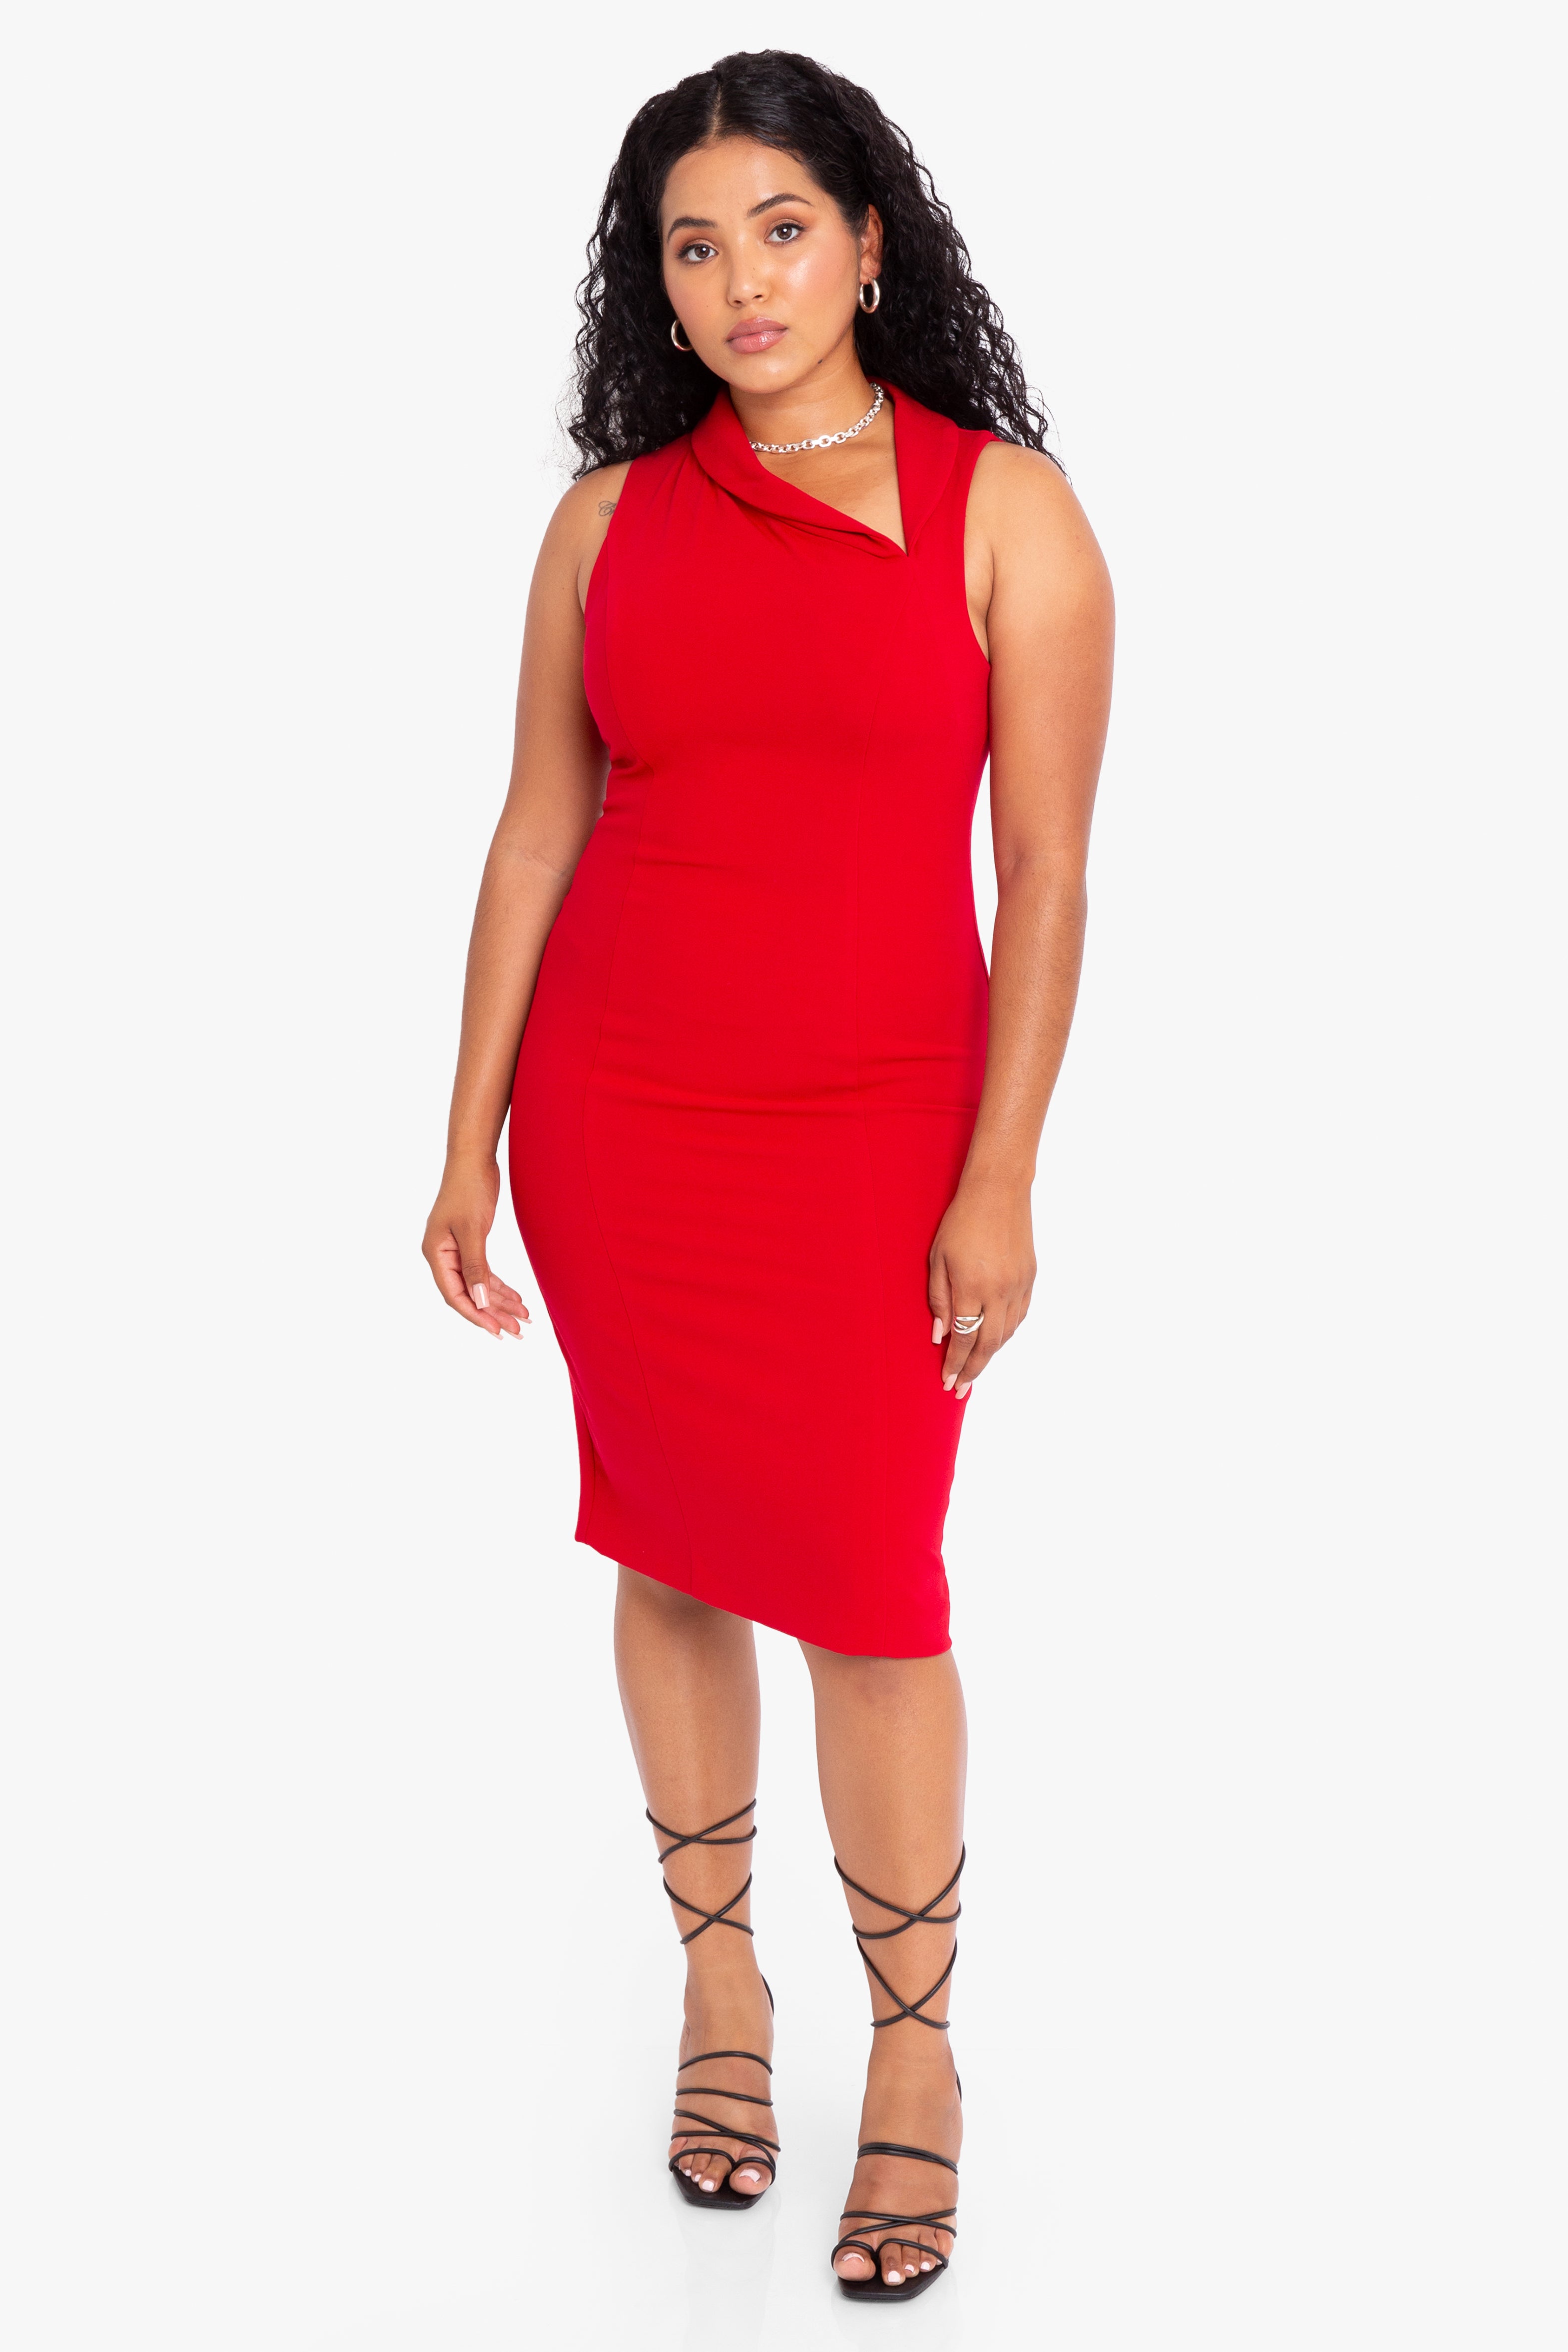 Blaze Denim Dress 💙👖 €79 we love... - Ruby Rouge Boutique | Facebook